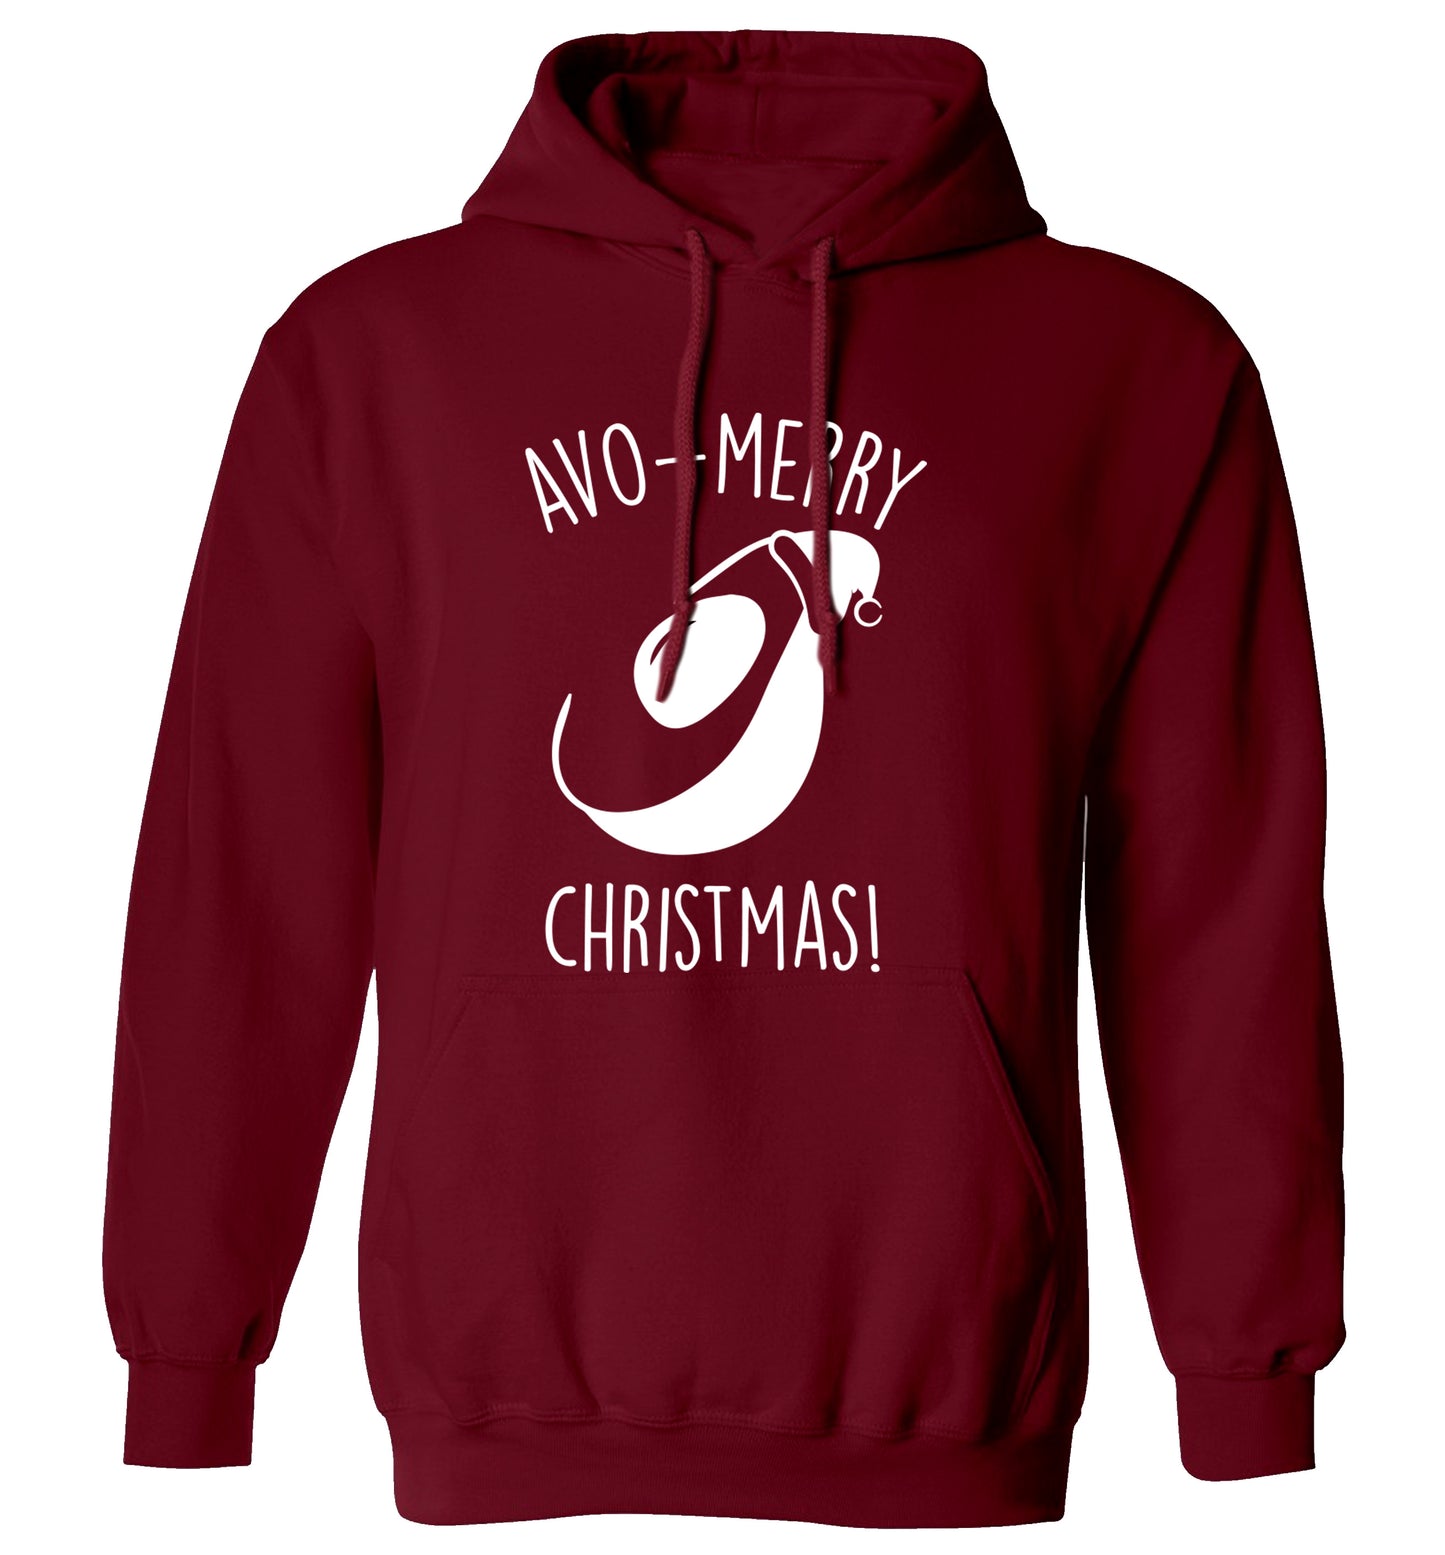 Avo-Merry Christmas adults unisex maroon hoodie 2XL